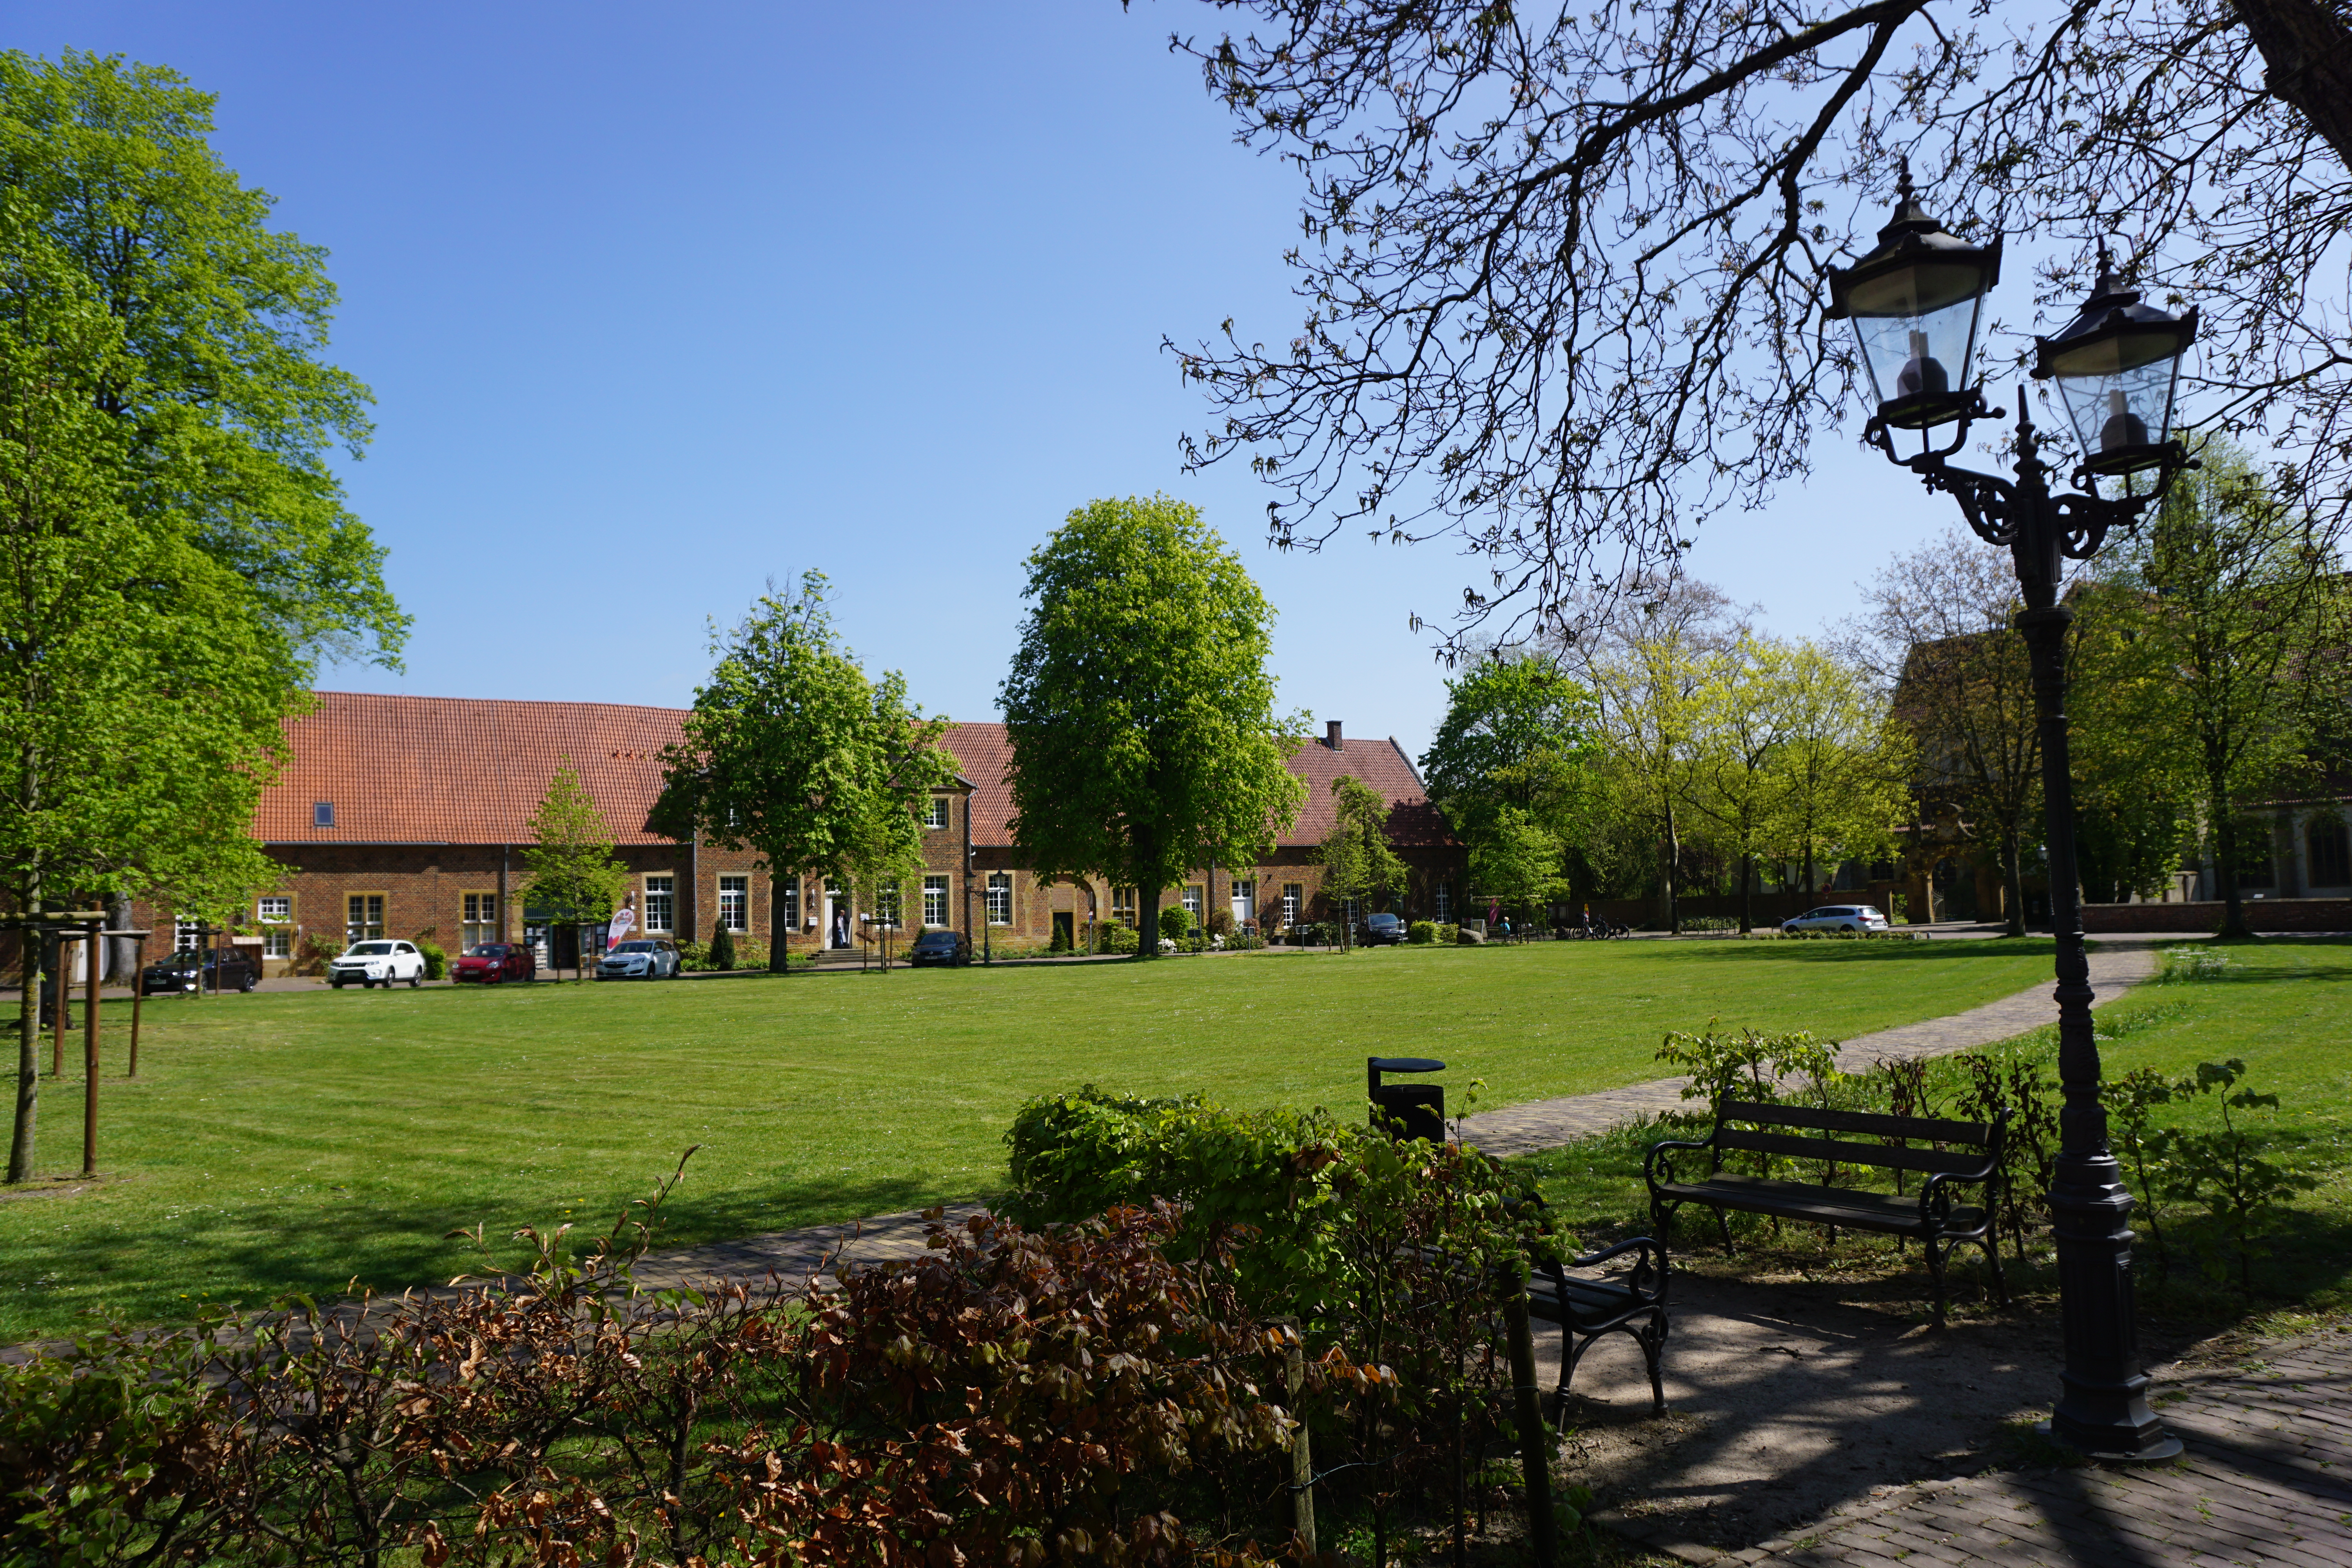 Parkanlage Kloster Marienfeld, Harsewinkel.
